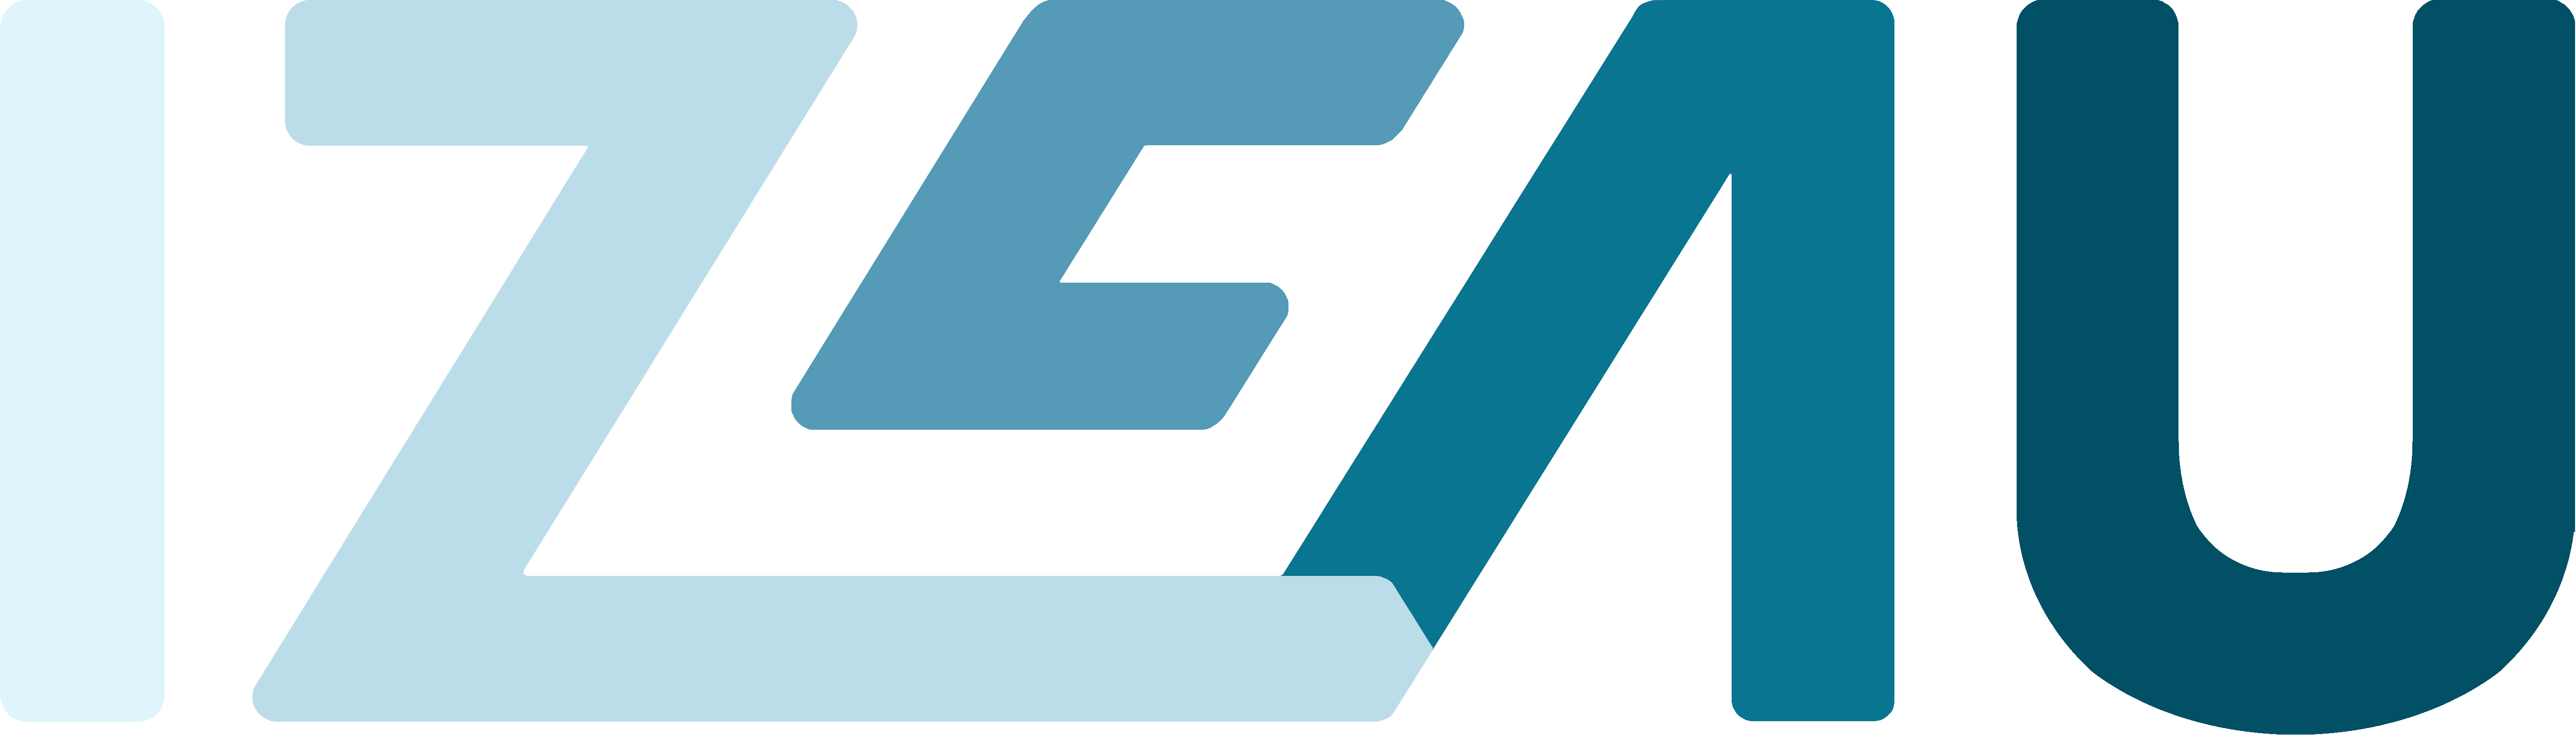 Logo IZEAU / SENERGY'T OUEST